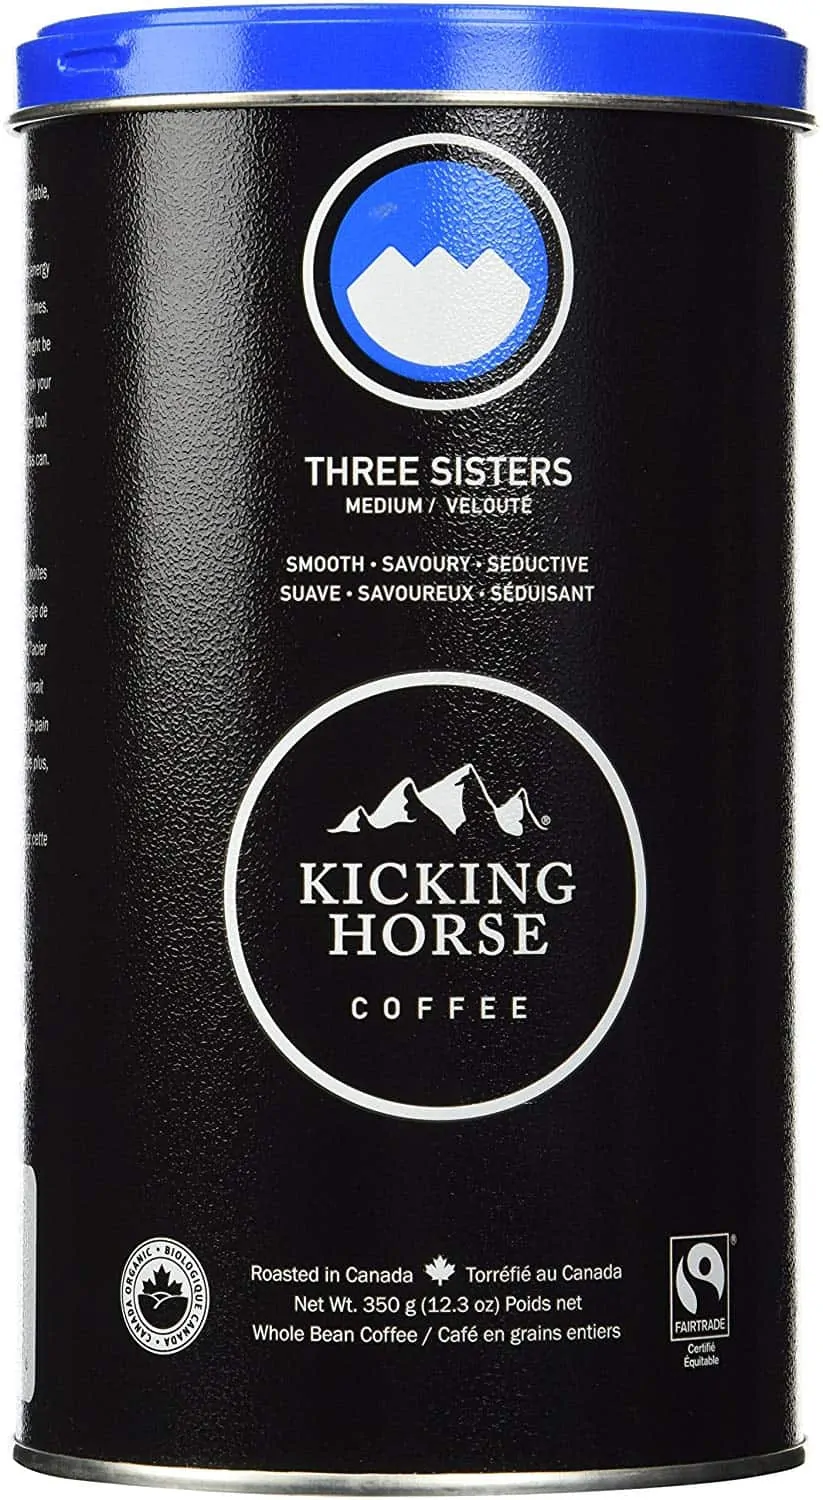 Kicking Horse Coffee, Three Sisters